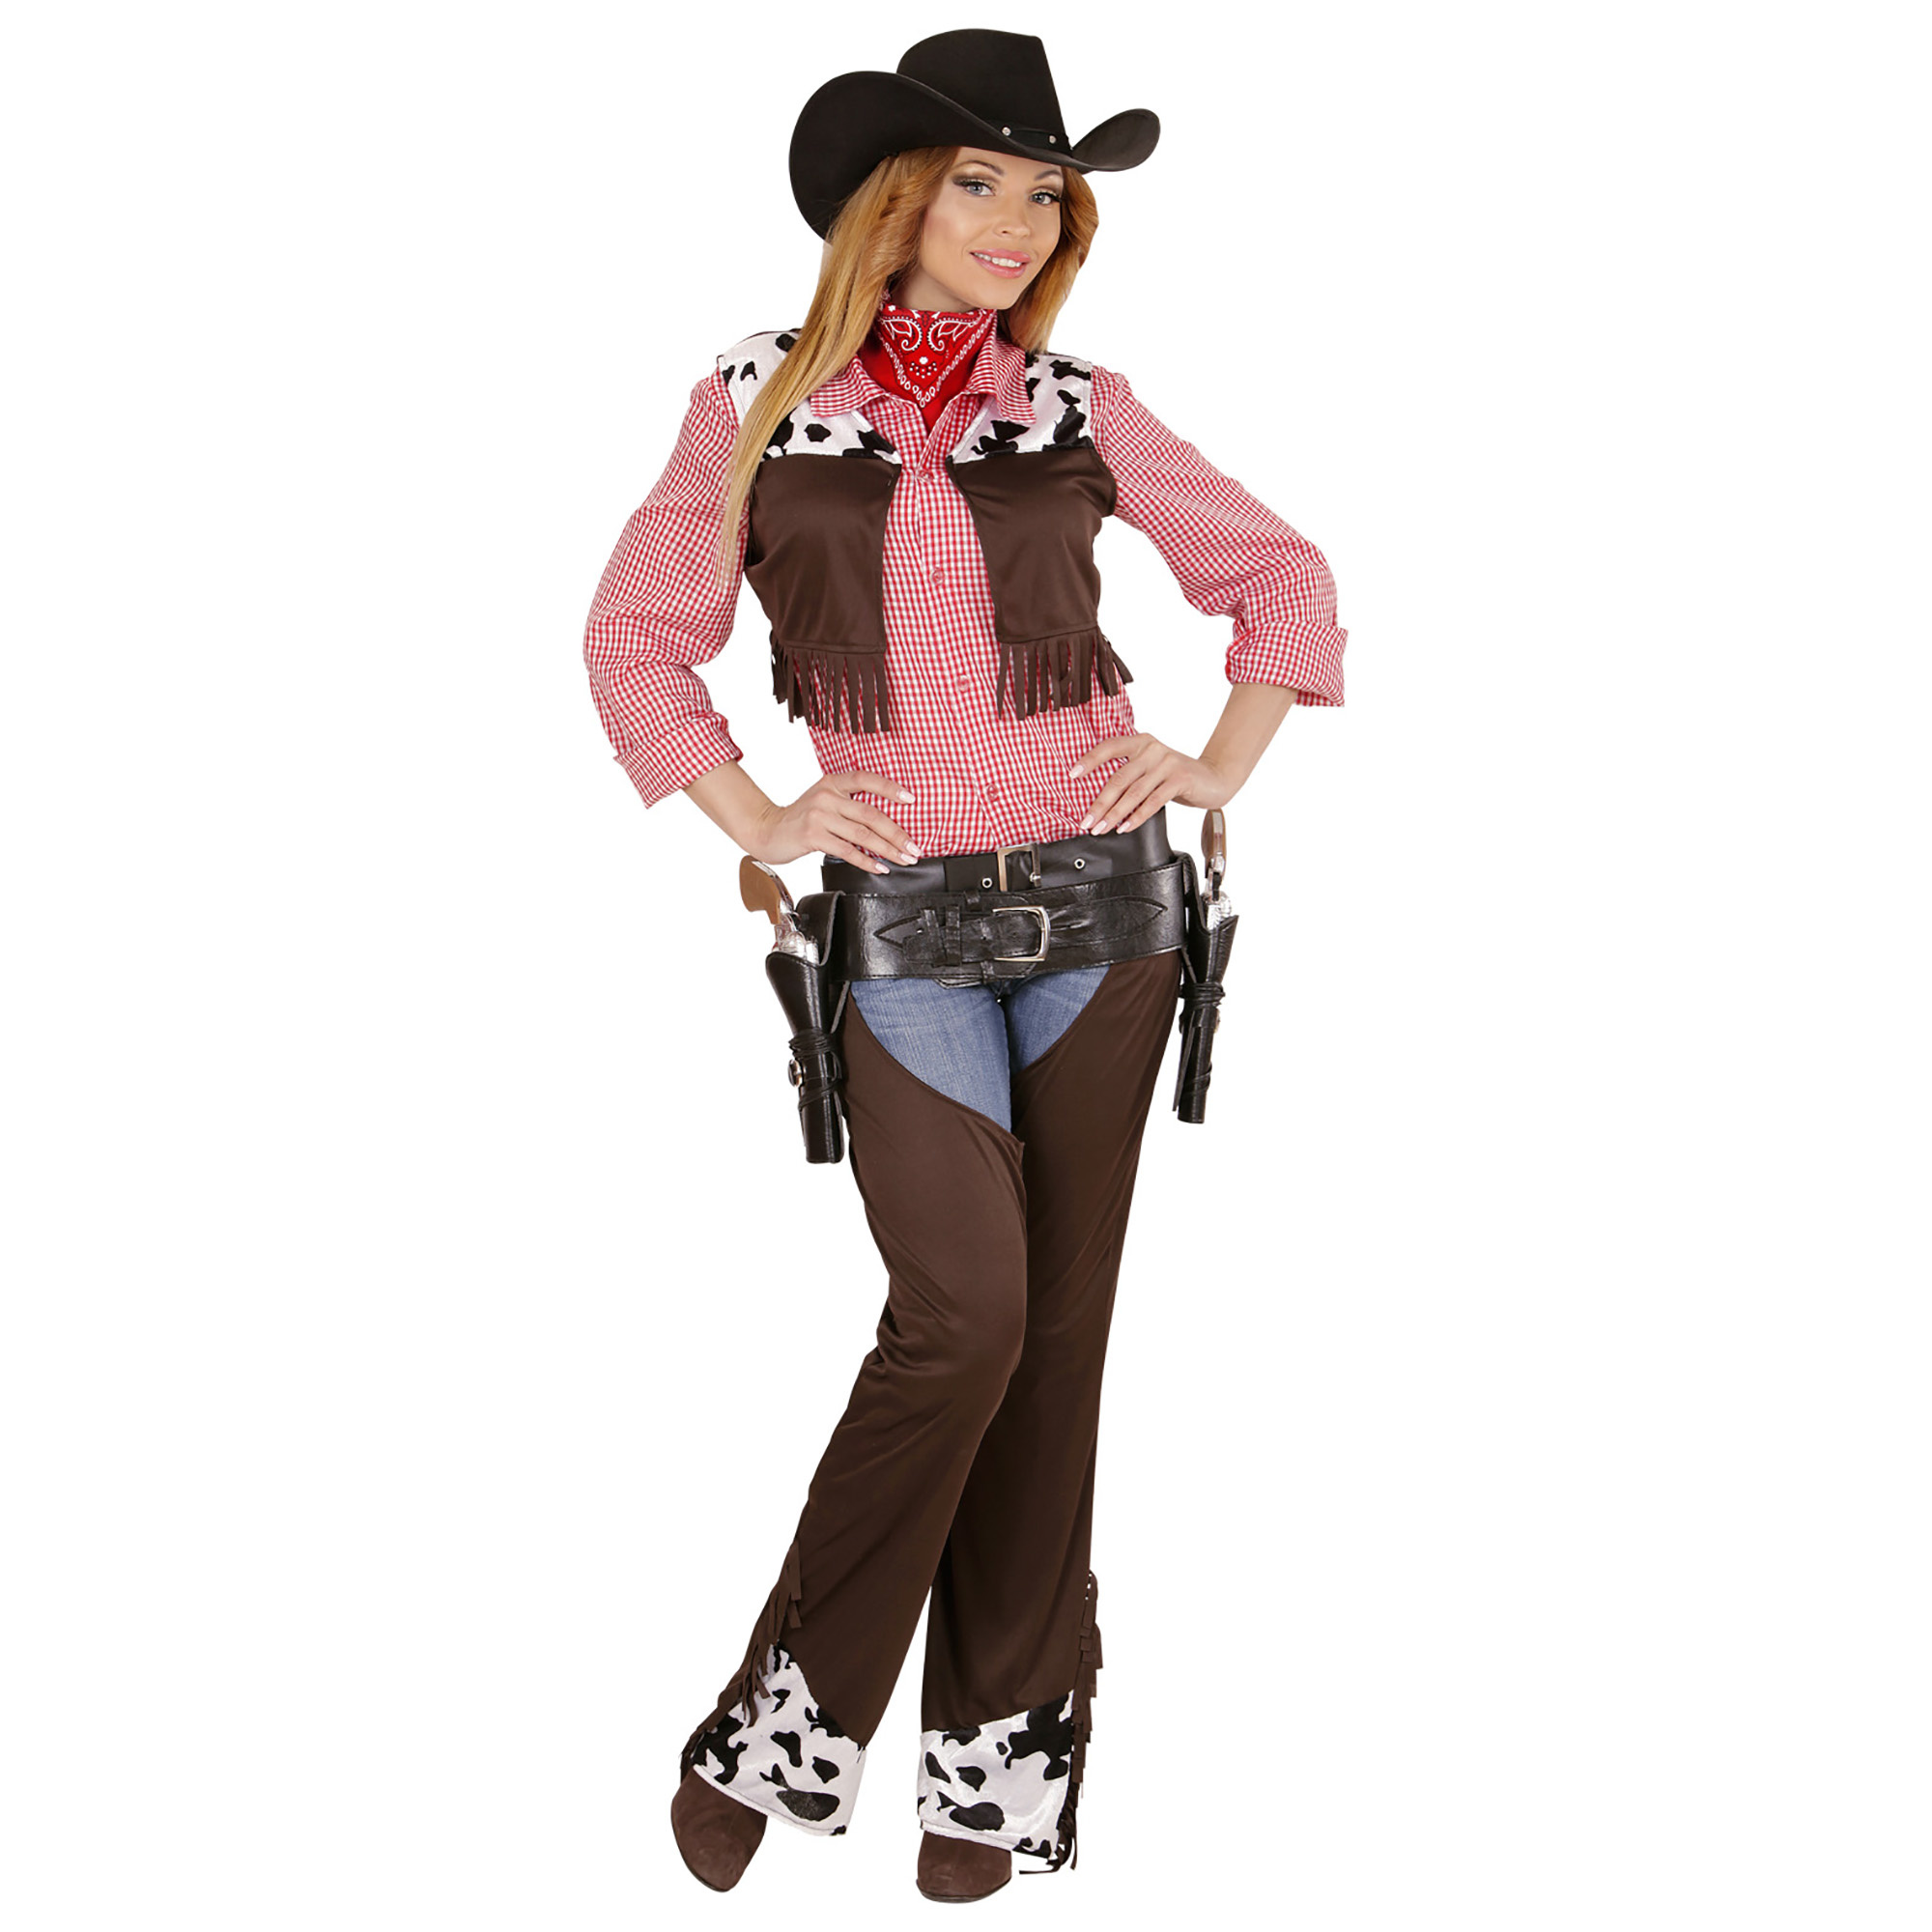 multifunctioneel Ongepast Kan weerstaan Cowgirl kostuum voor echte cowboys - e-Carnavalskleding